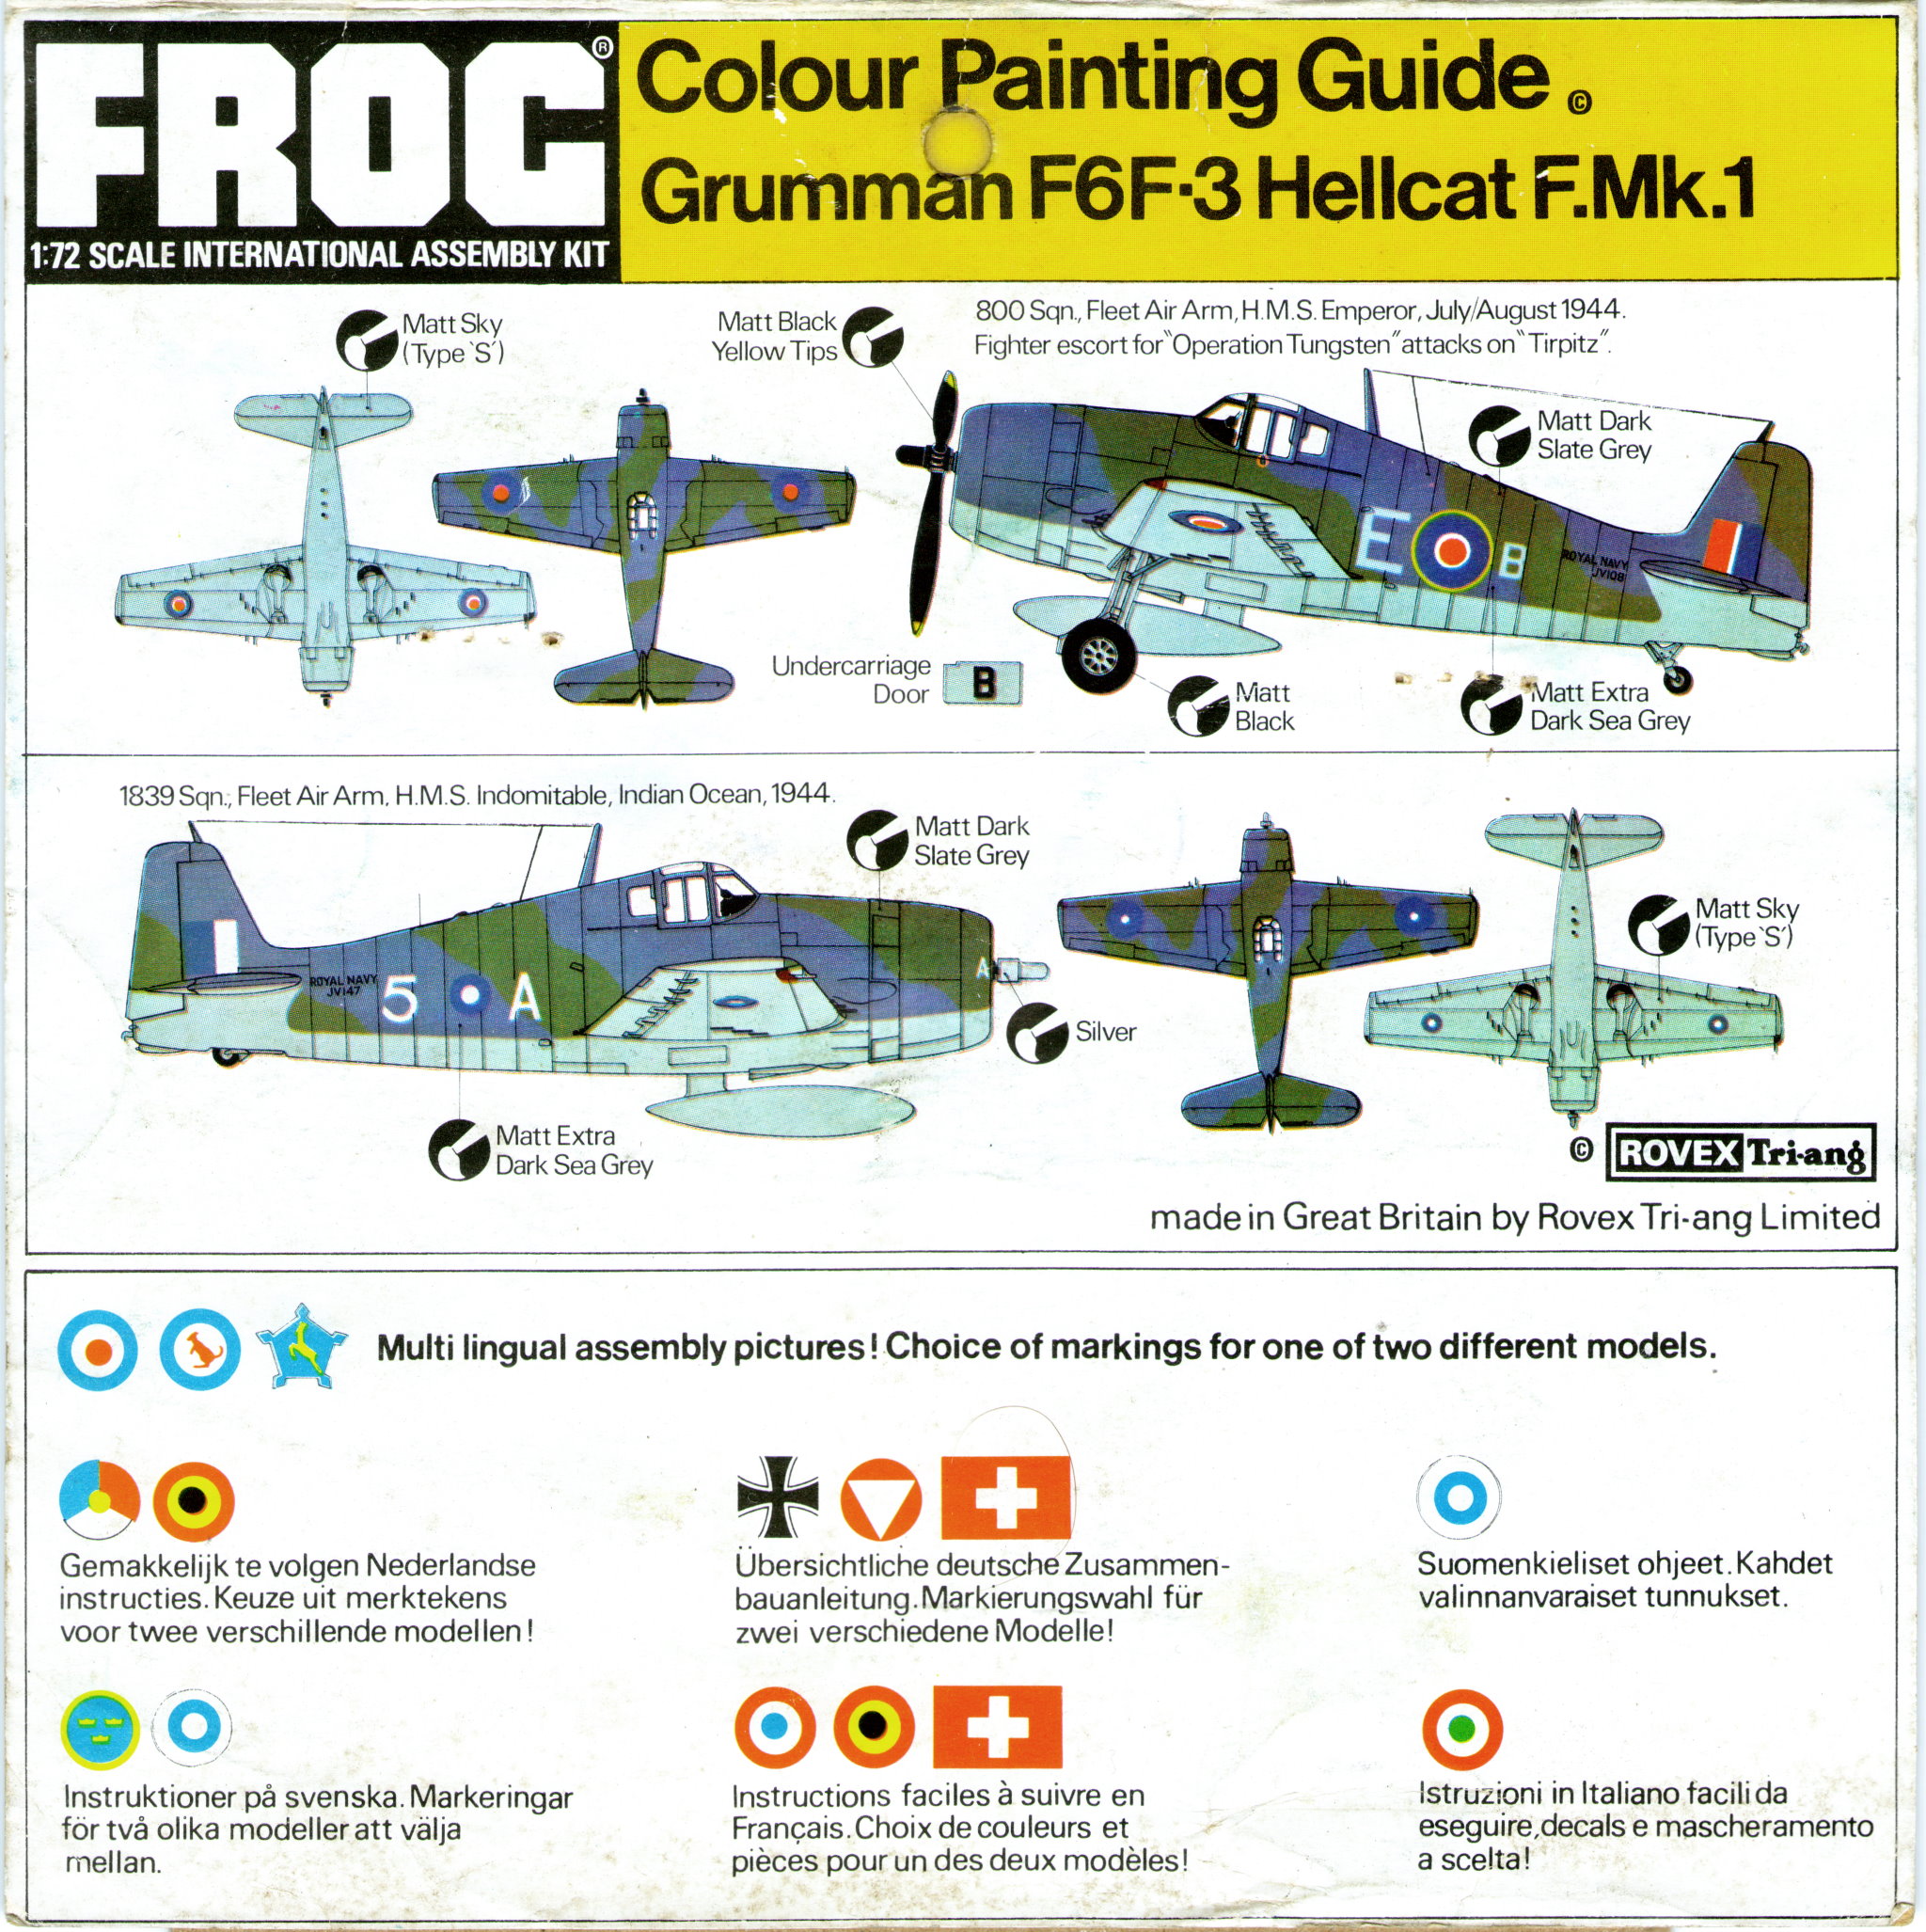 Схема окраски и маркировки FROG F245F Grumman F6F-3 Hellcat F.Mk.1, Black Series, Rovex Tri-ang, 1971